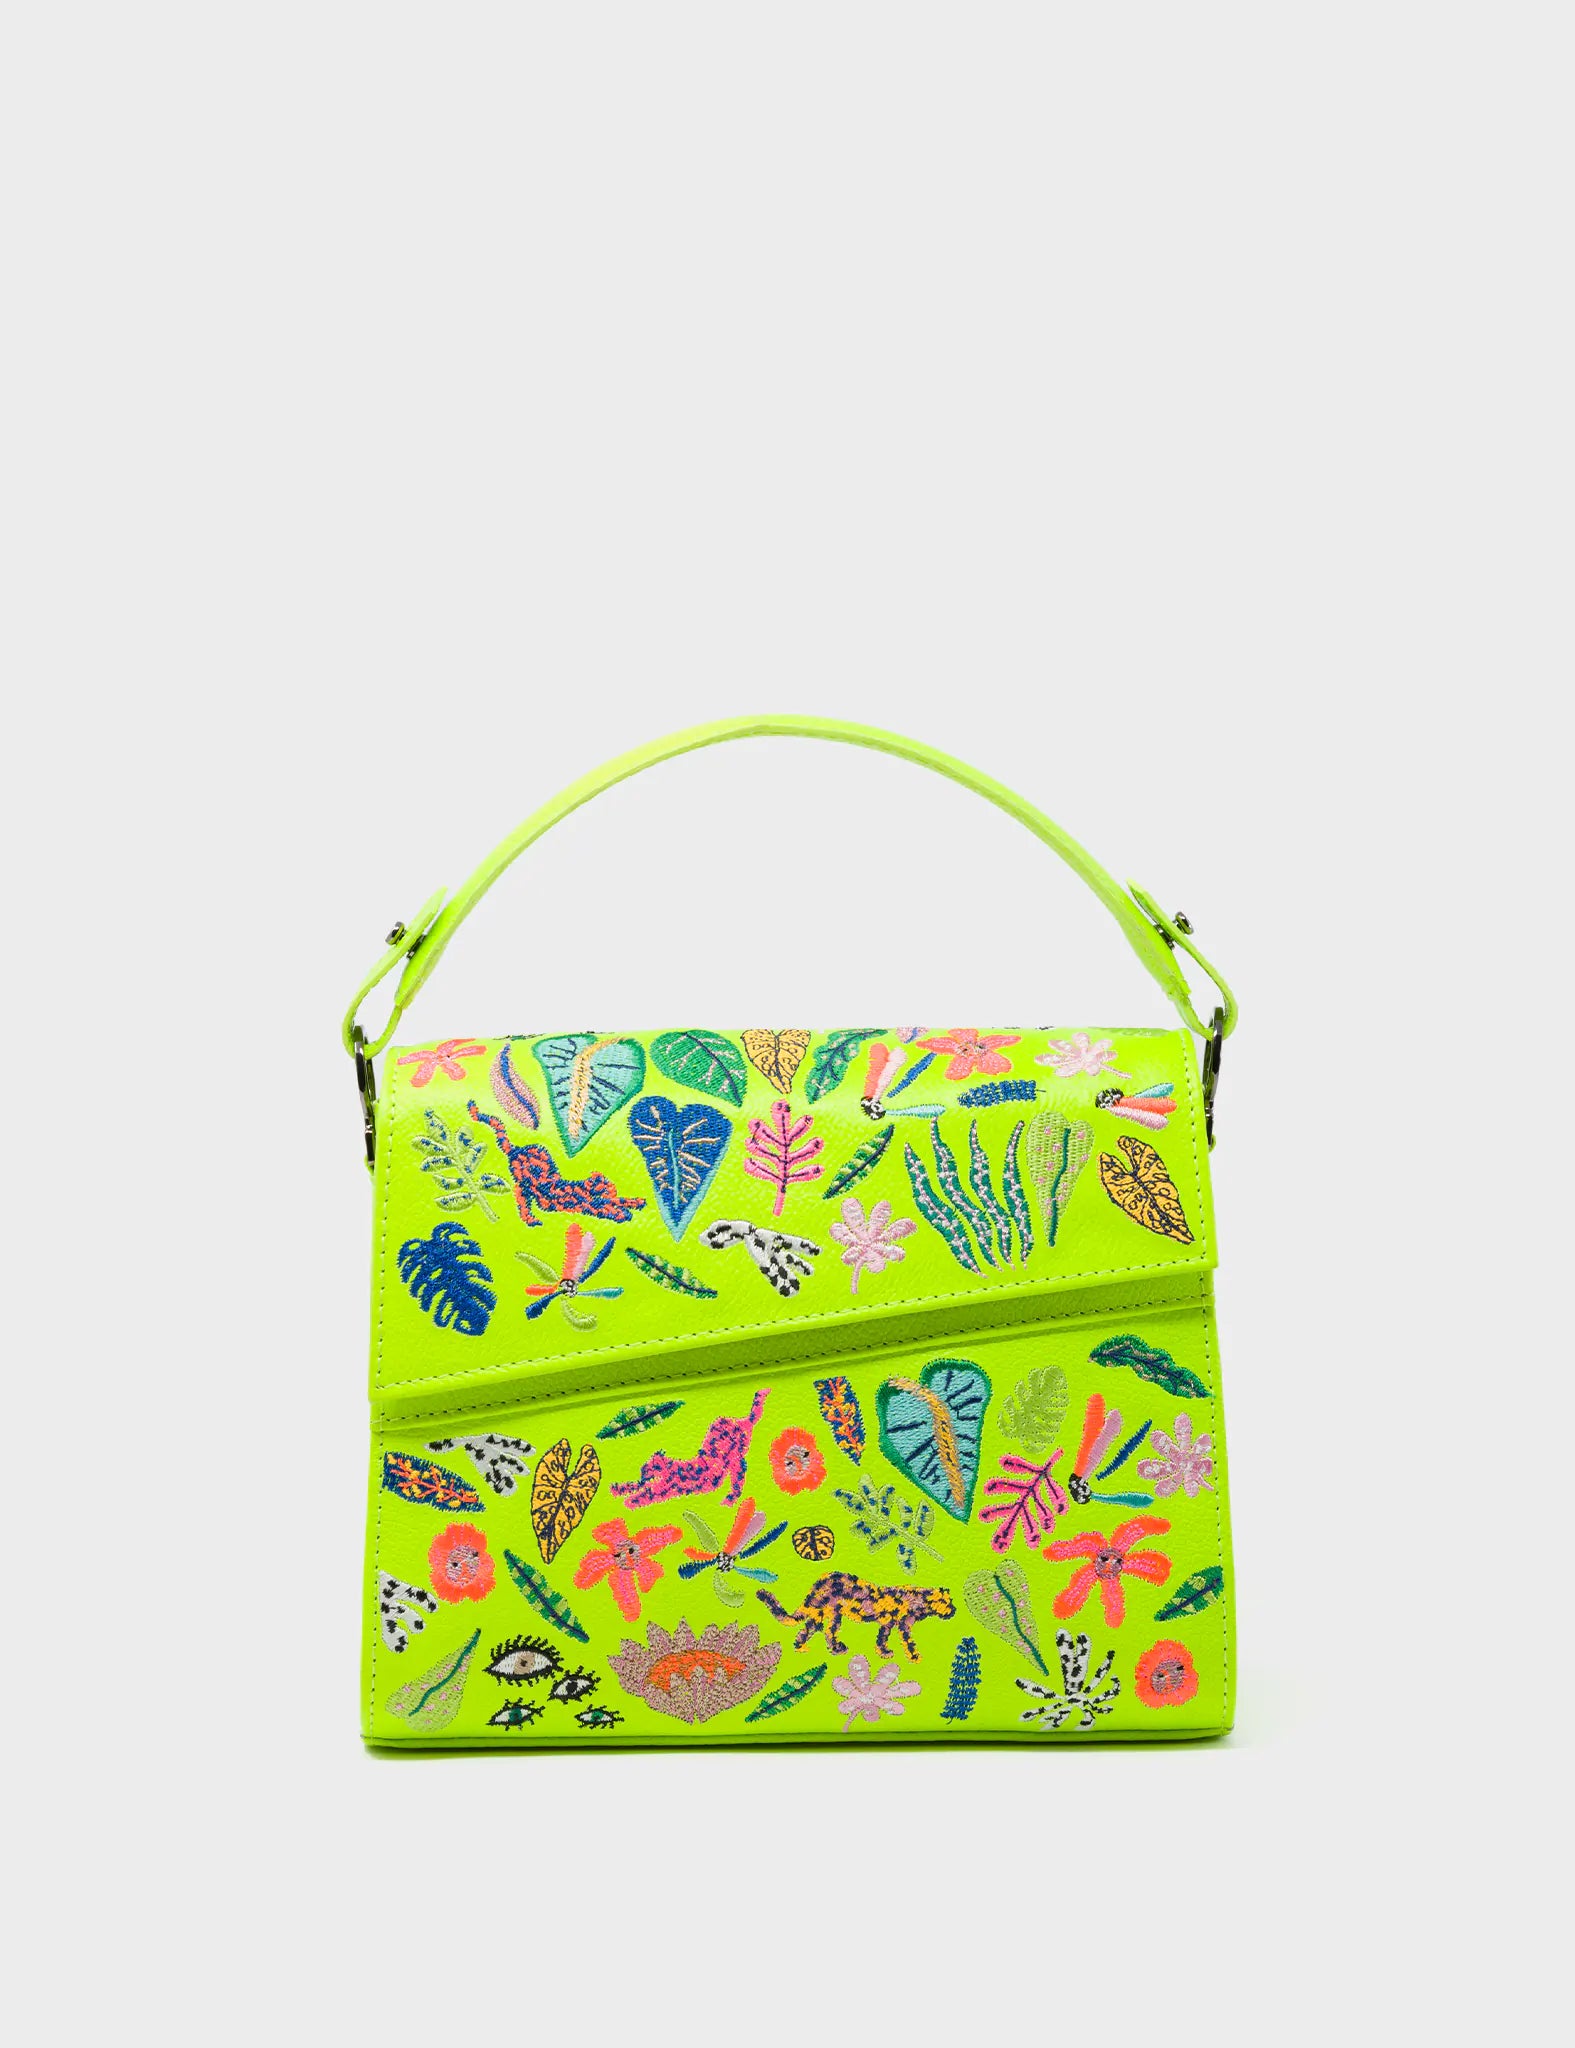 Anastasio Mini Crossbody Handbag Neon Yellow Leather - El Trópico Embroidery Design - Front